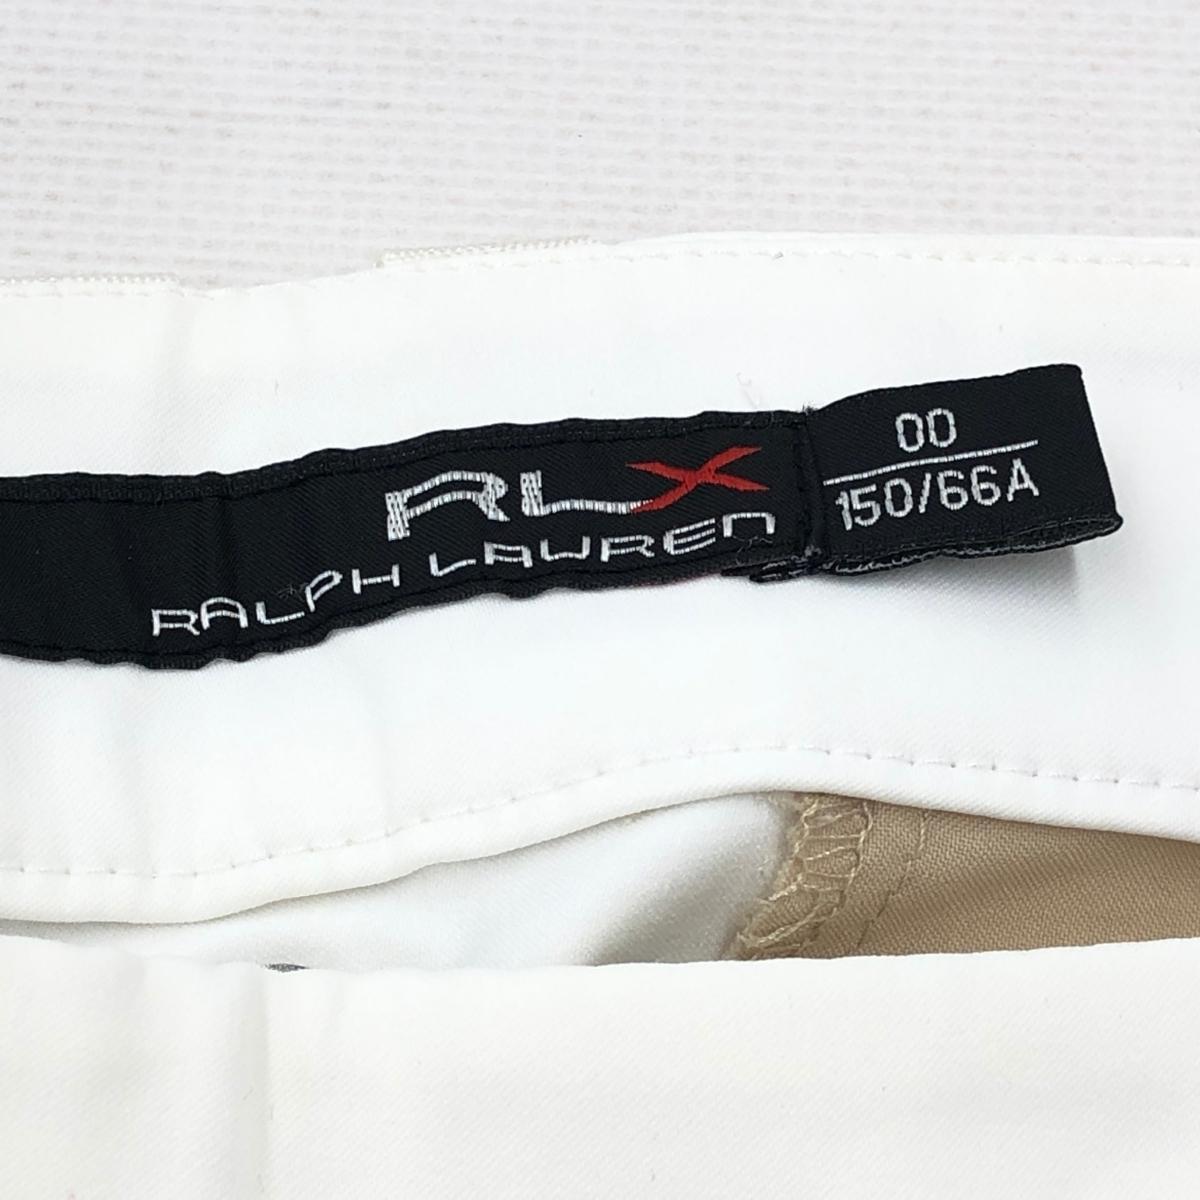  excellent *RLX Ralph Laurena-ru L X Ralph Lauren pants size 00* white stretch lady's Golf wear bottoms 